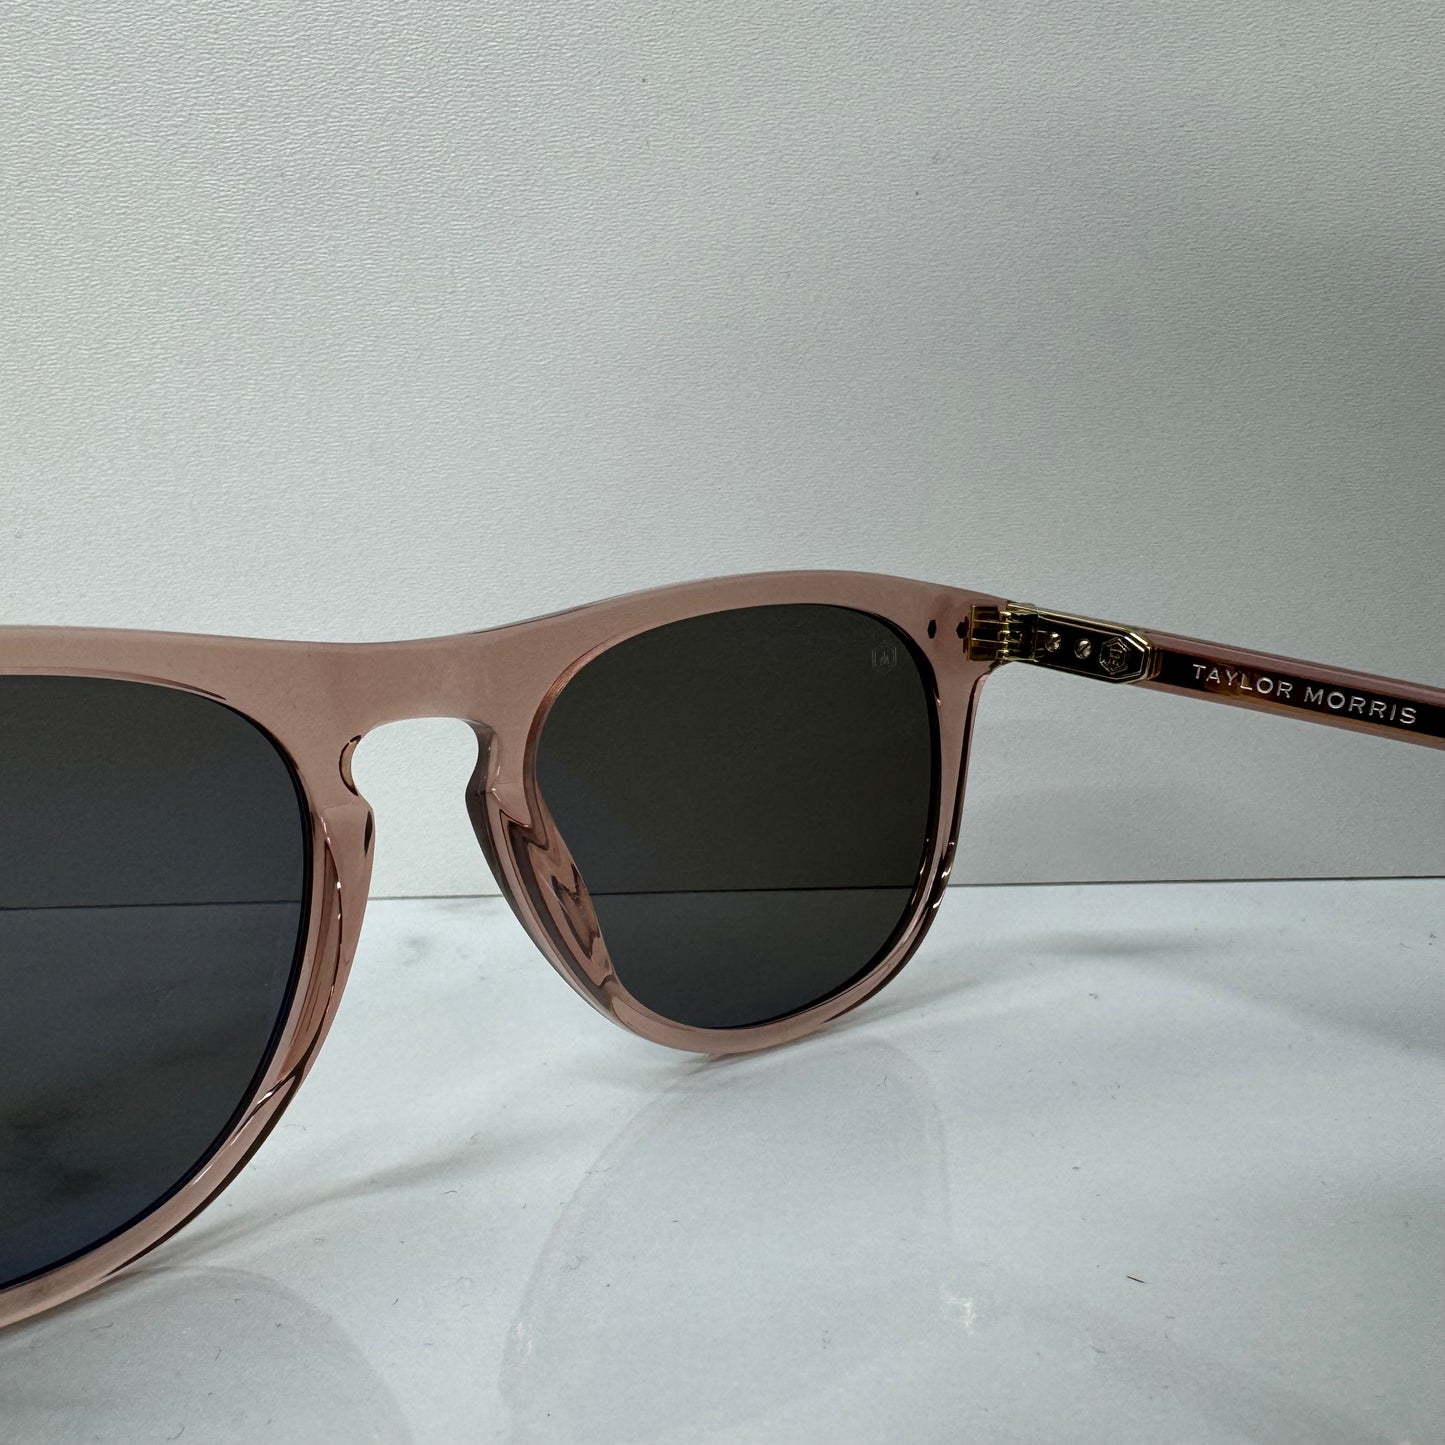 Taylor Morris Bassett Rose Clear Sunglasses - 32065 C5